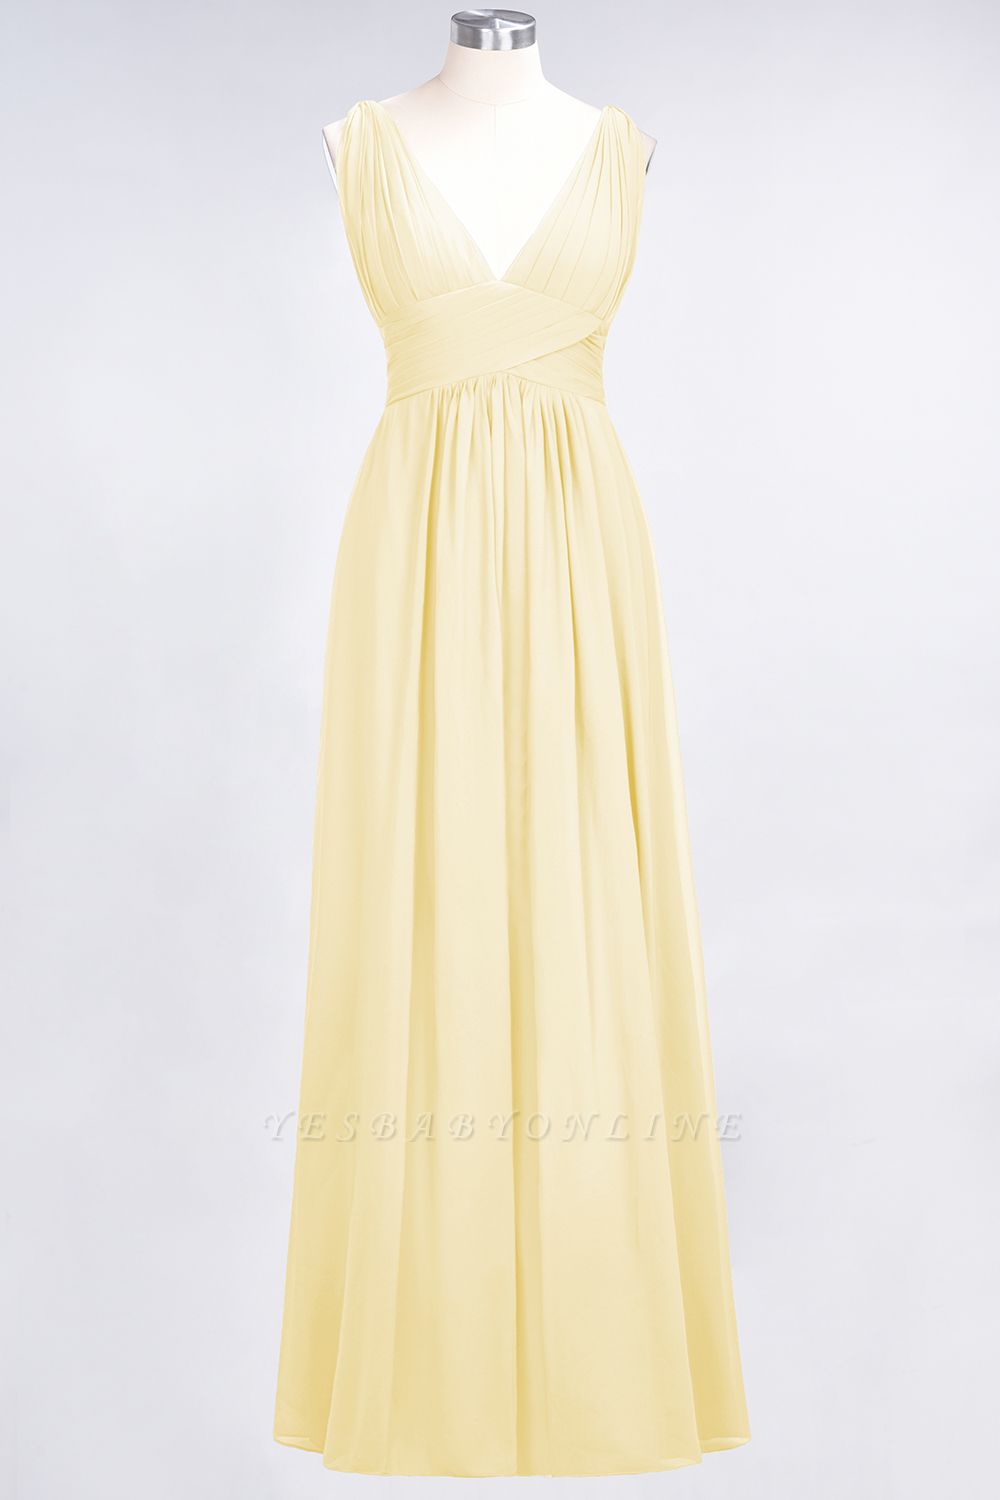 A-Line V-Neck Sleeveless Floor-Length  Bridesmaid Dress with Ruffle